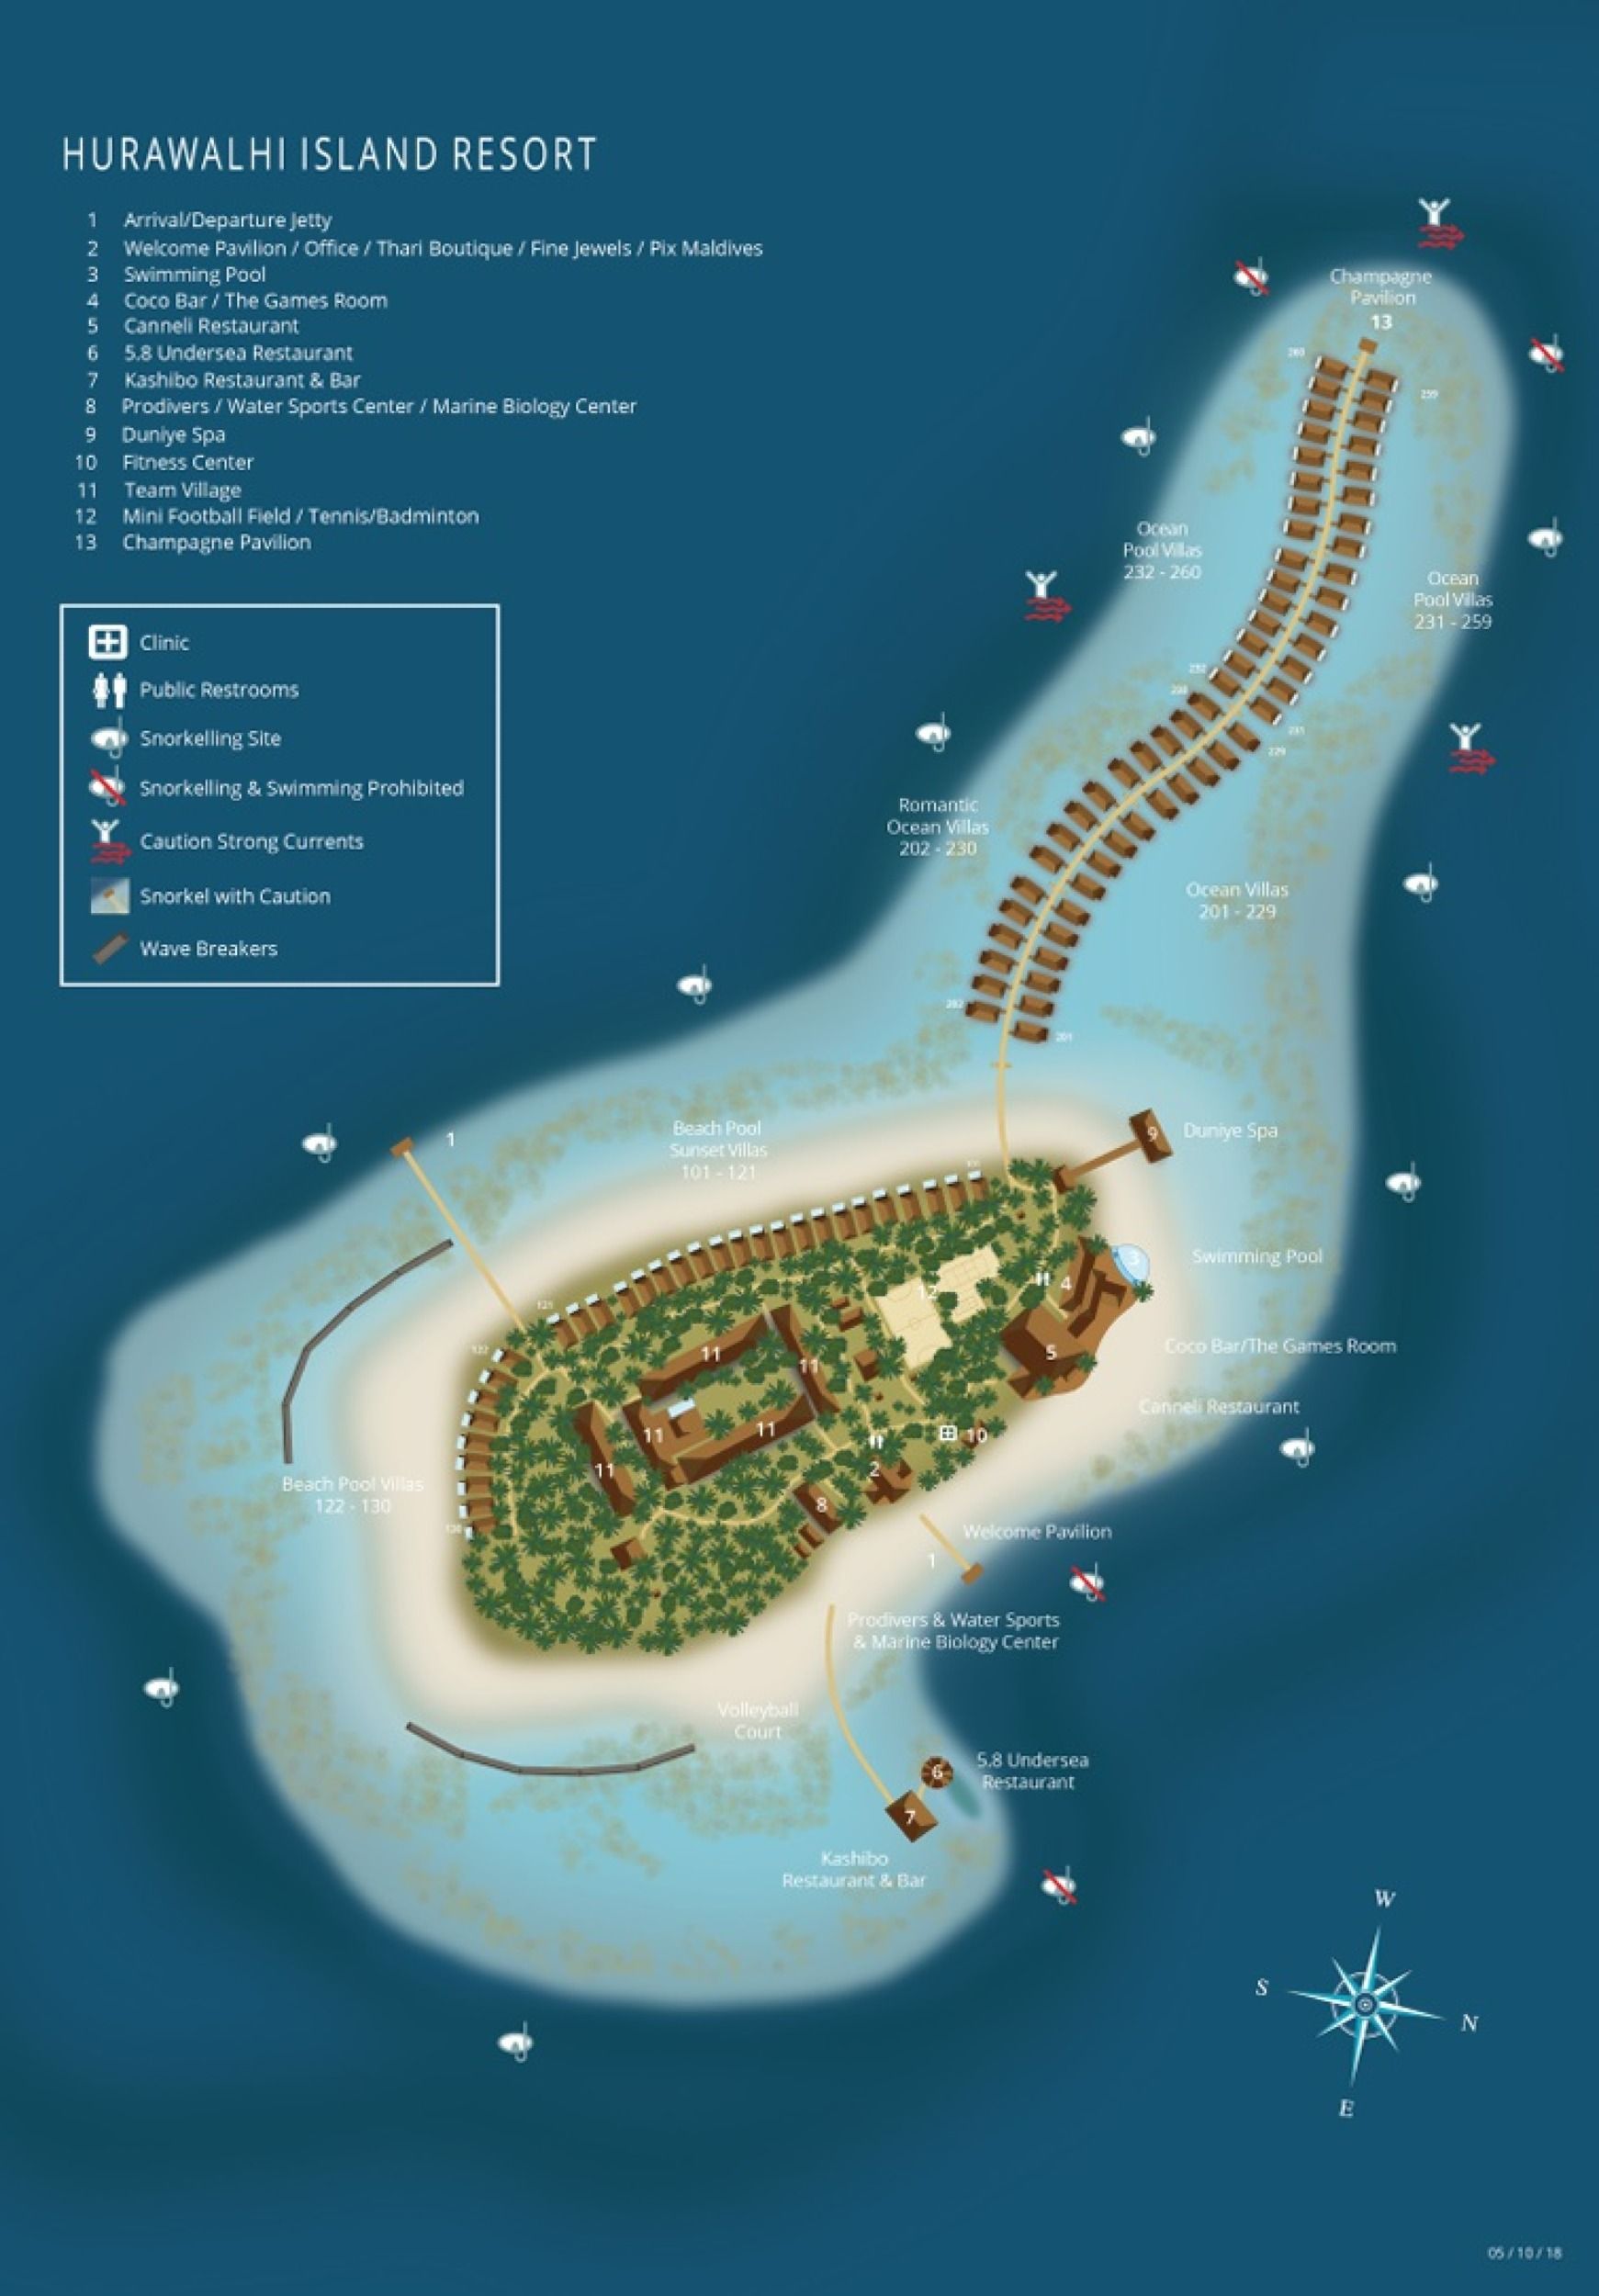 Hurawalhi Island Resort - Resort Map